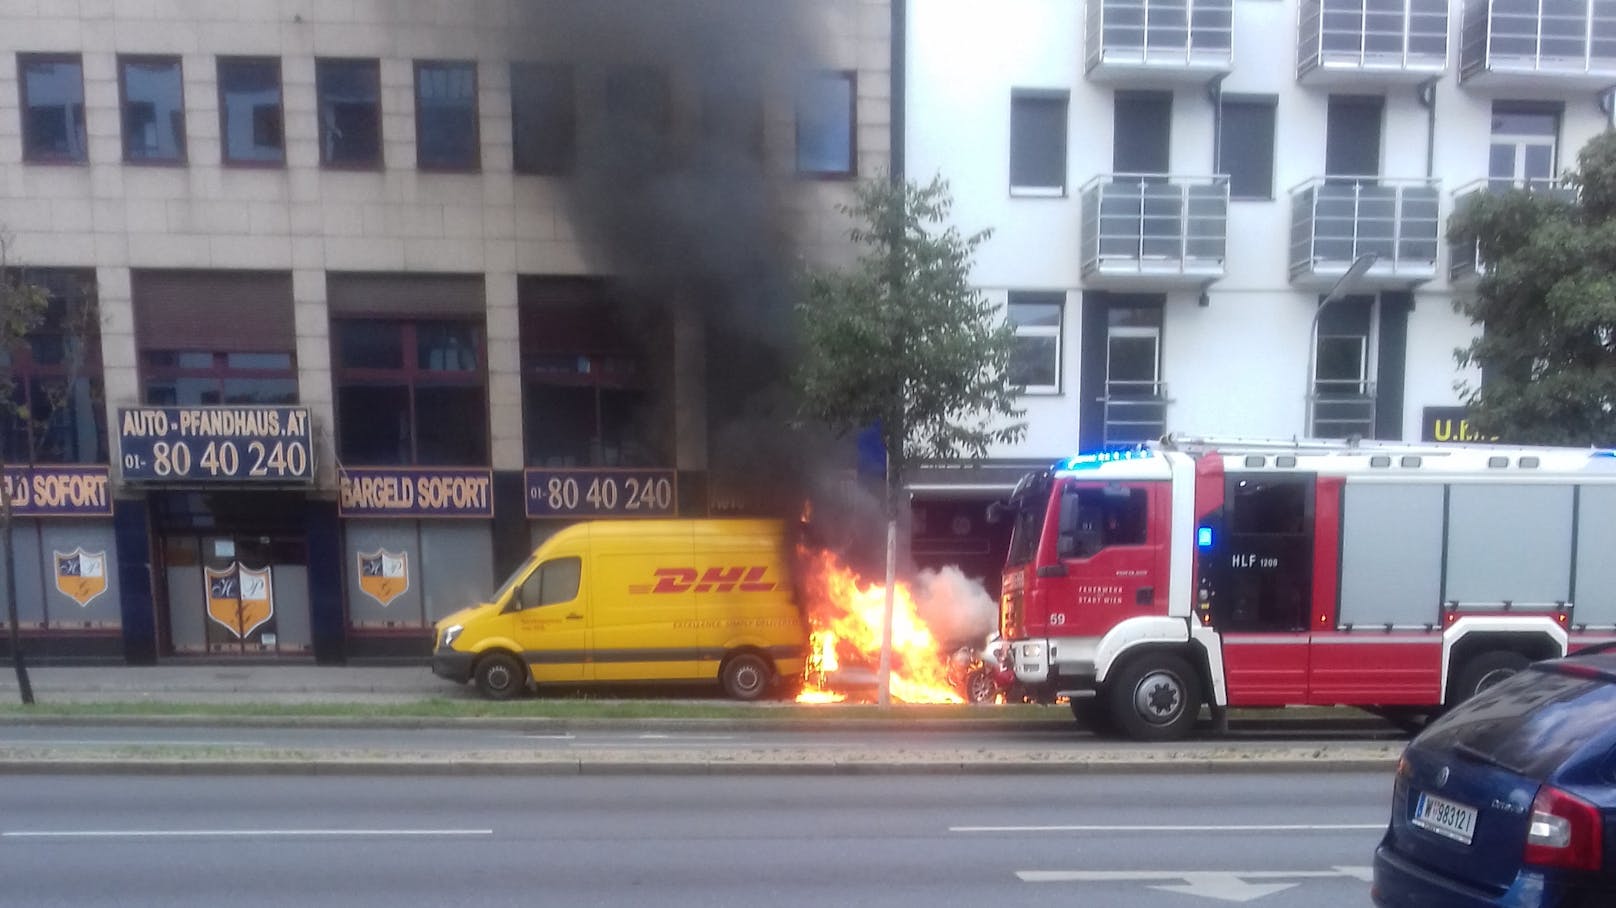 Autobrand am Samstag in Wien-Liesing